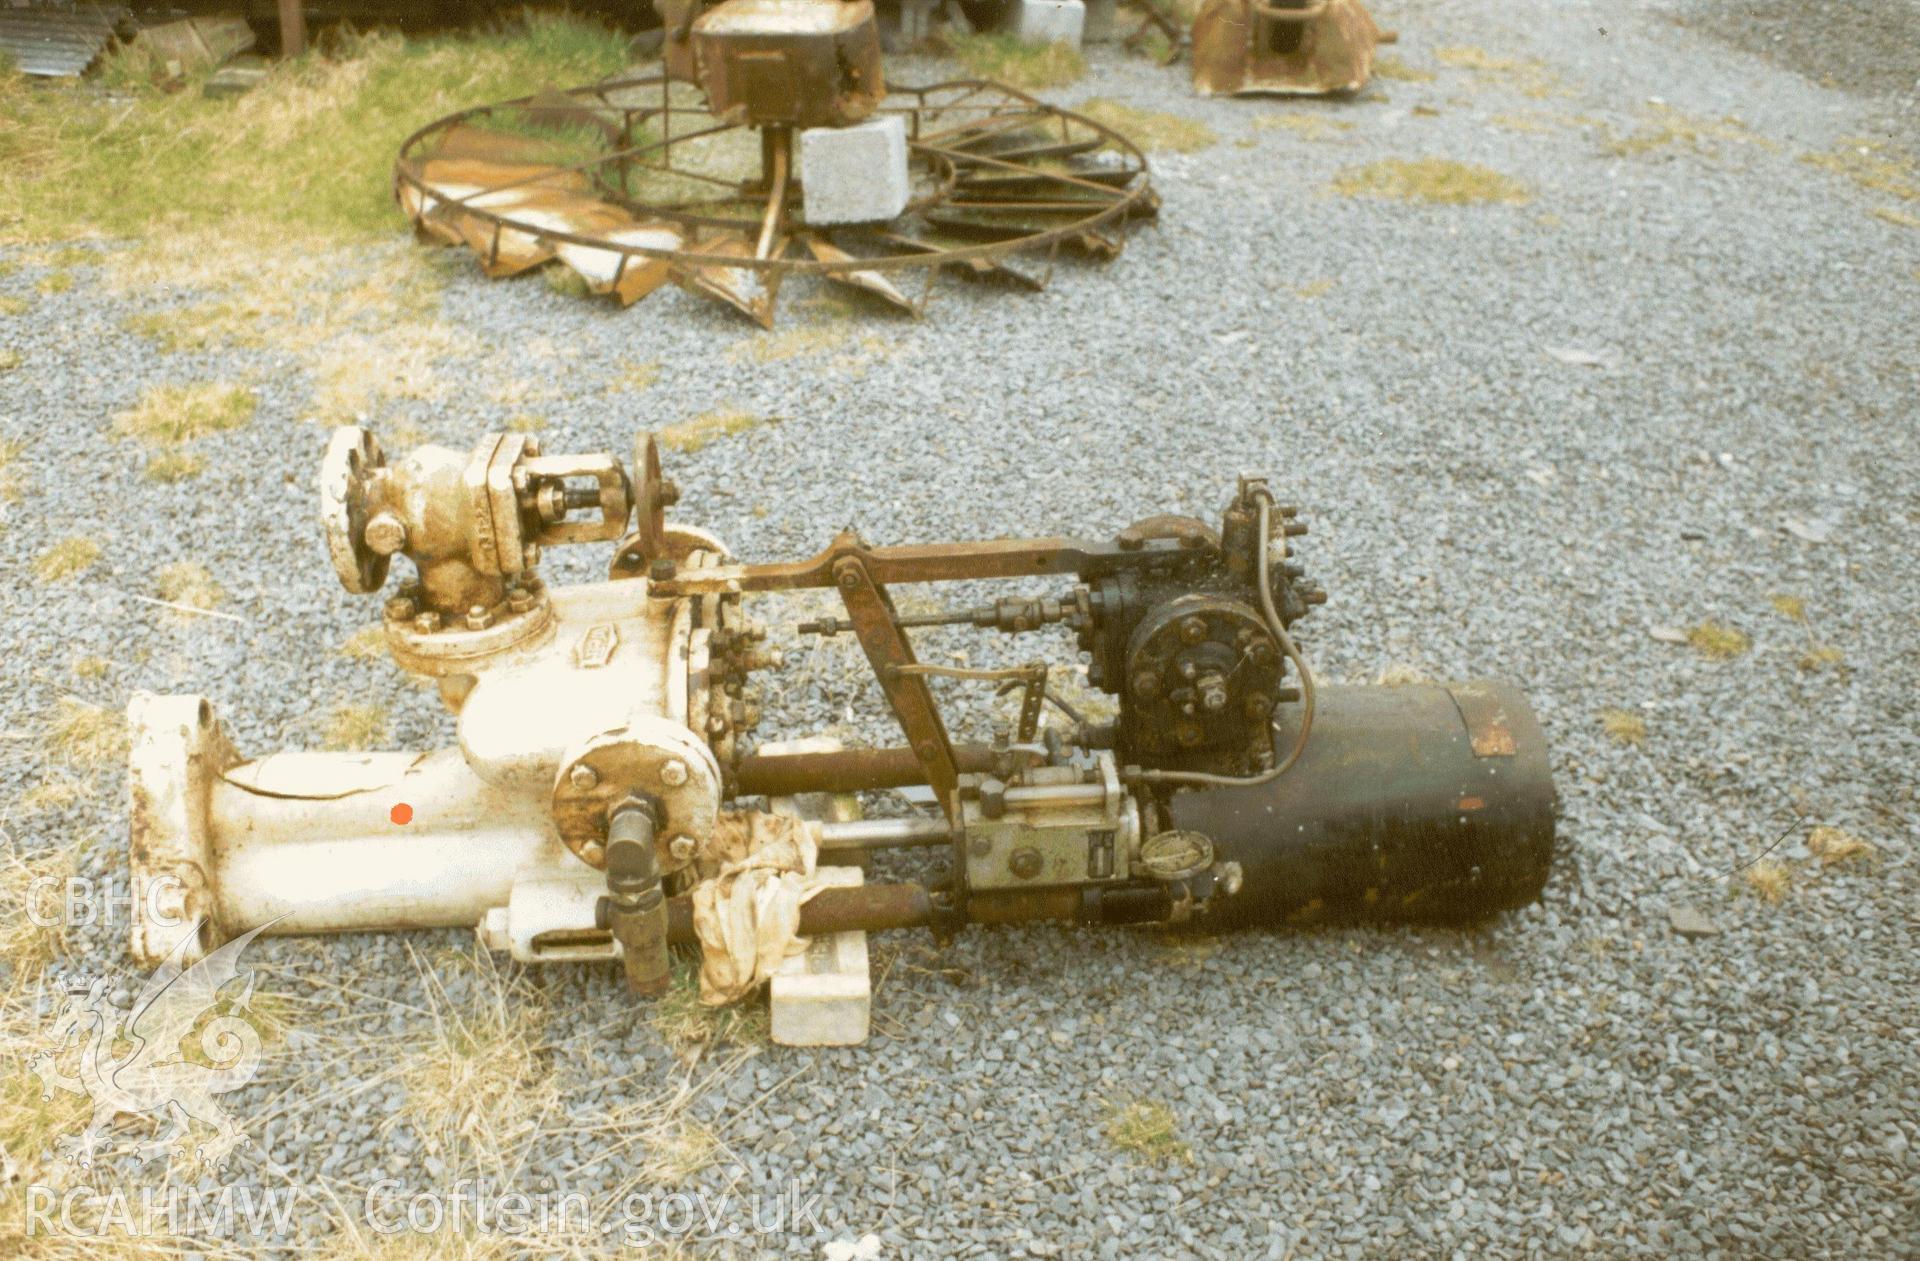 Digital colour photograph showing a weir pump and climax wind engine Llywernog mine.